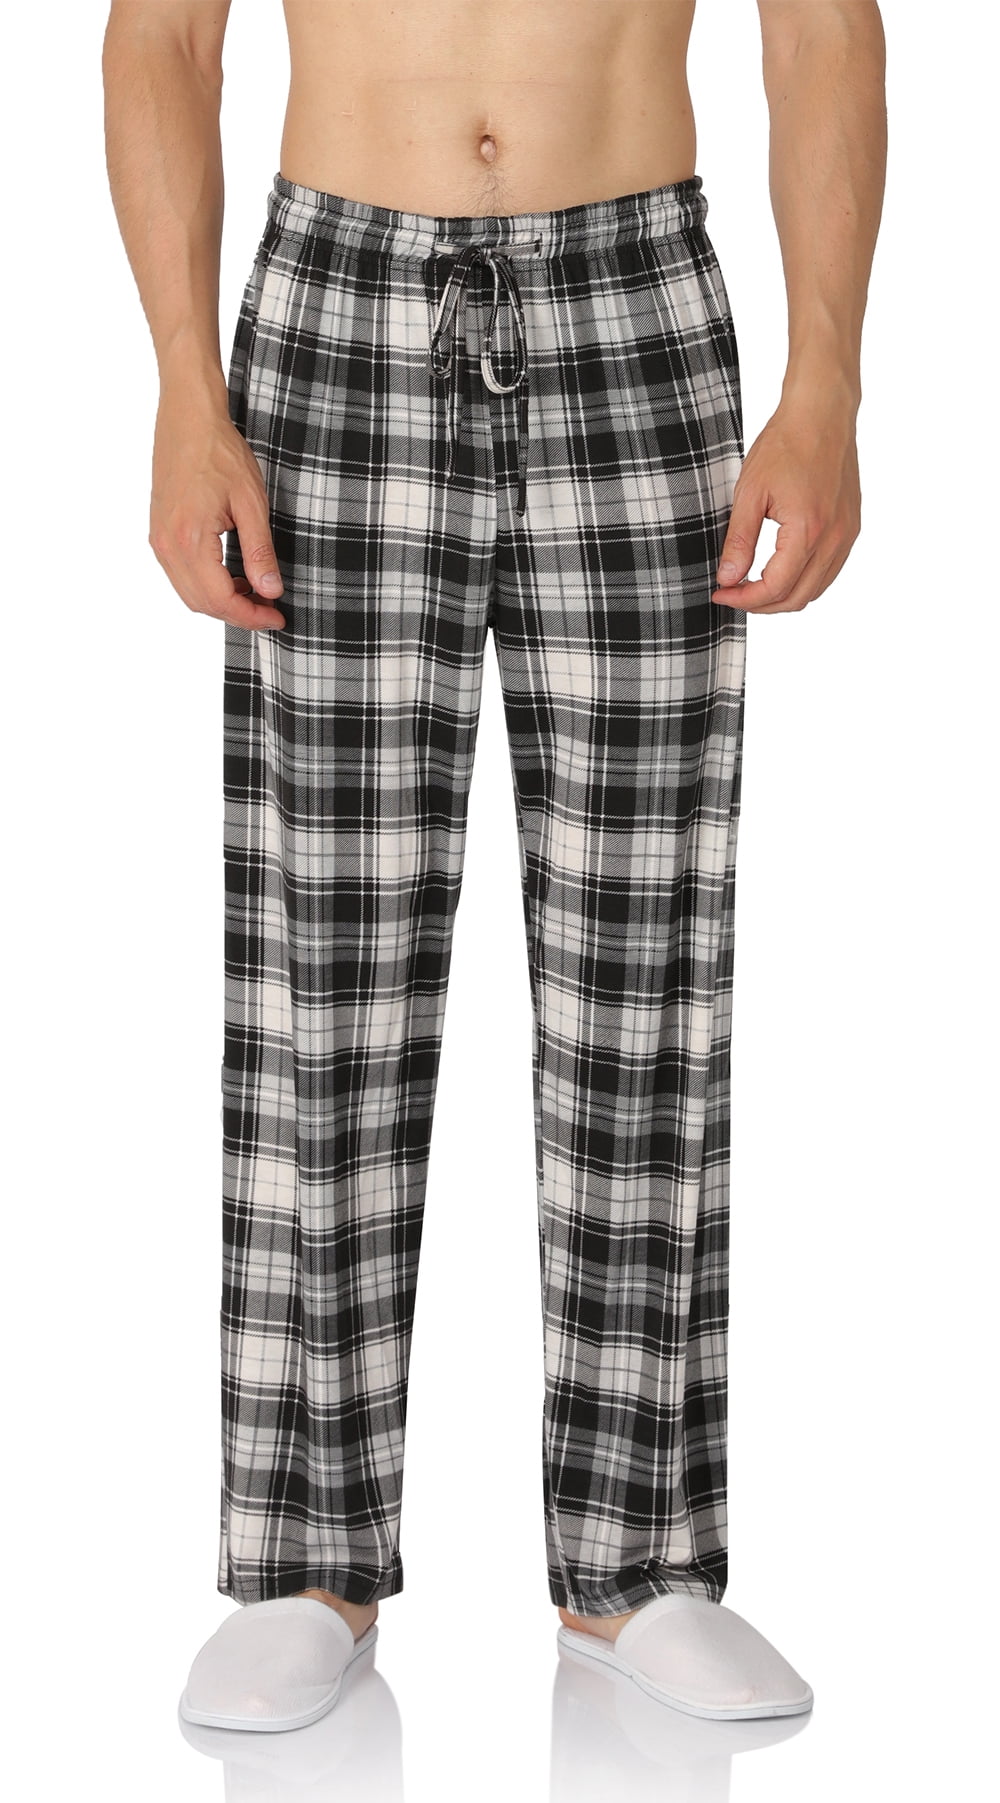 YIMANIE Men's Pajama Pant Cotton Comfy Soft Lounge Sleep Pants Black,Navy,Gray,Red,Blue S-XXXL 